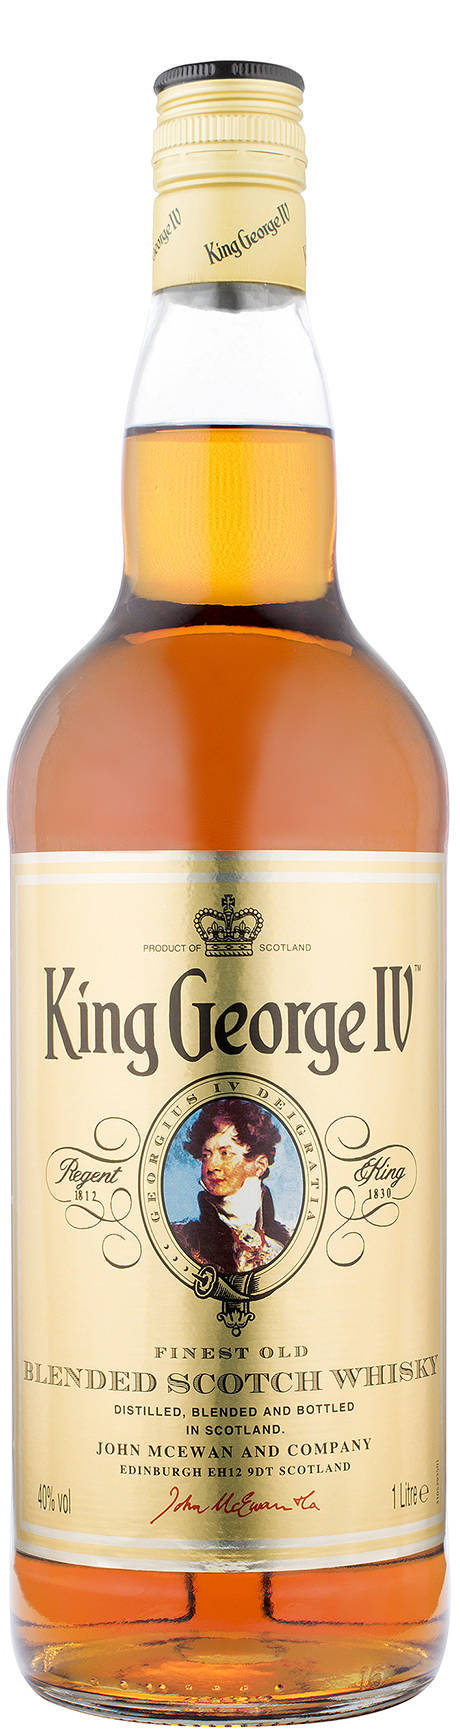 King George IV Blended Scotch Whisky